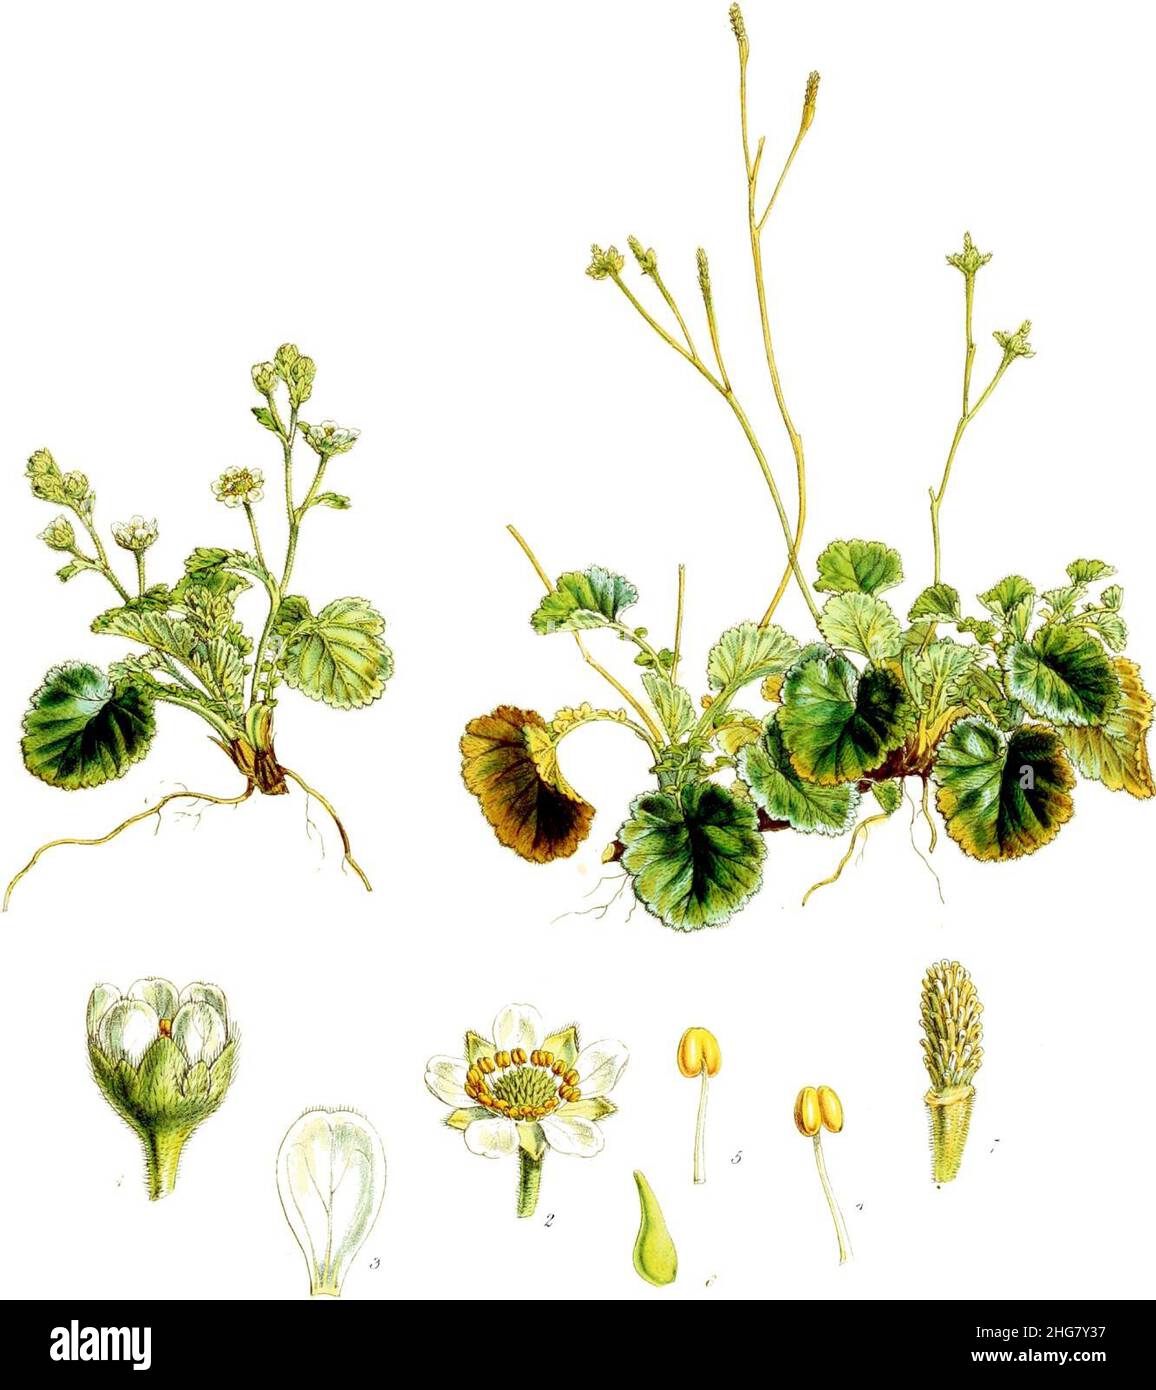 Sieversia albiflora-Botany of Antarctica-PL007-0019. Stock Photo